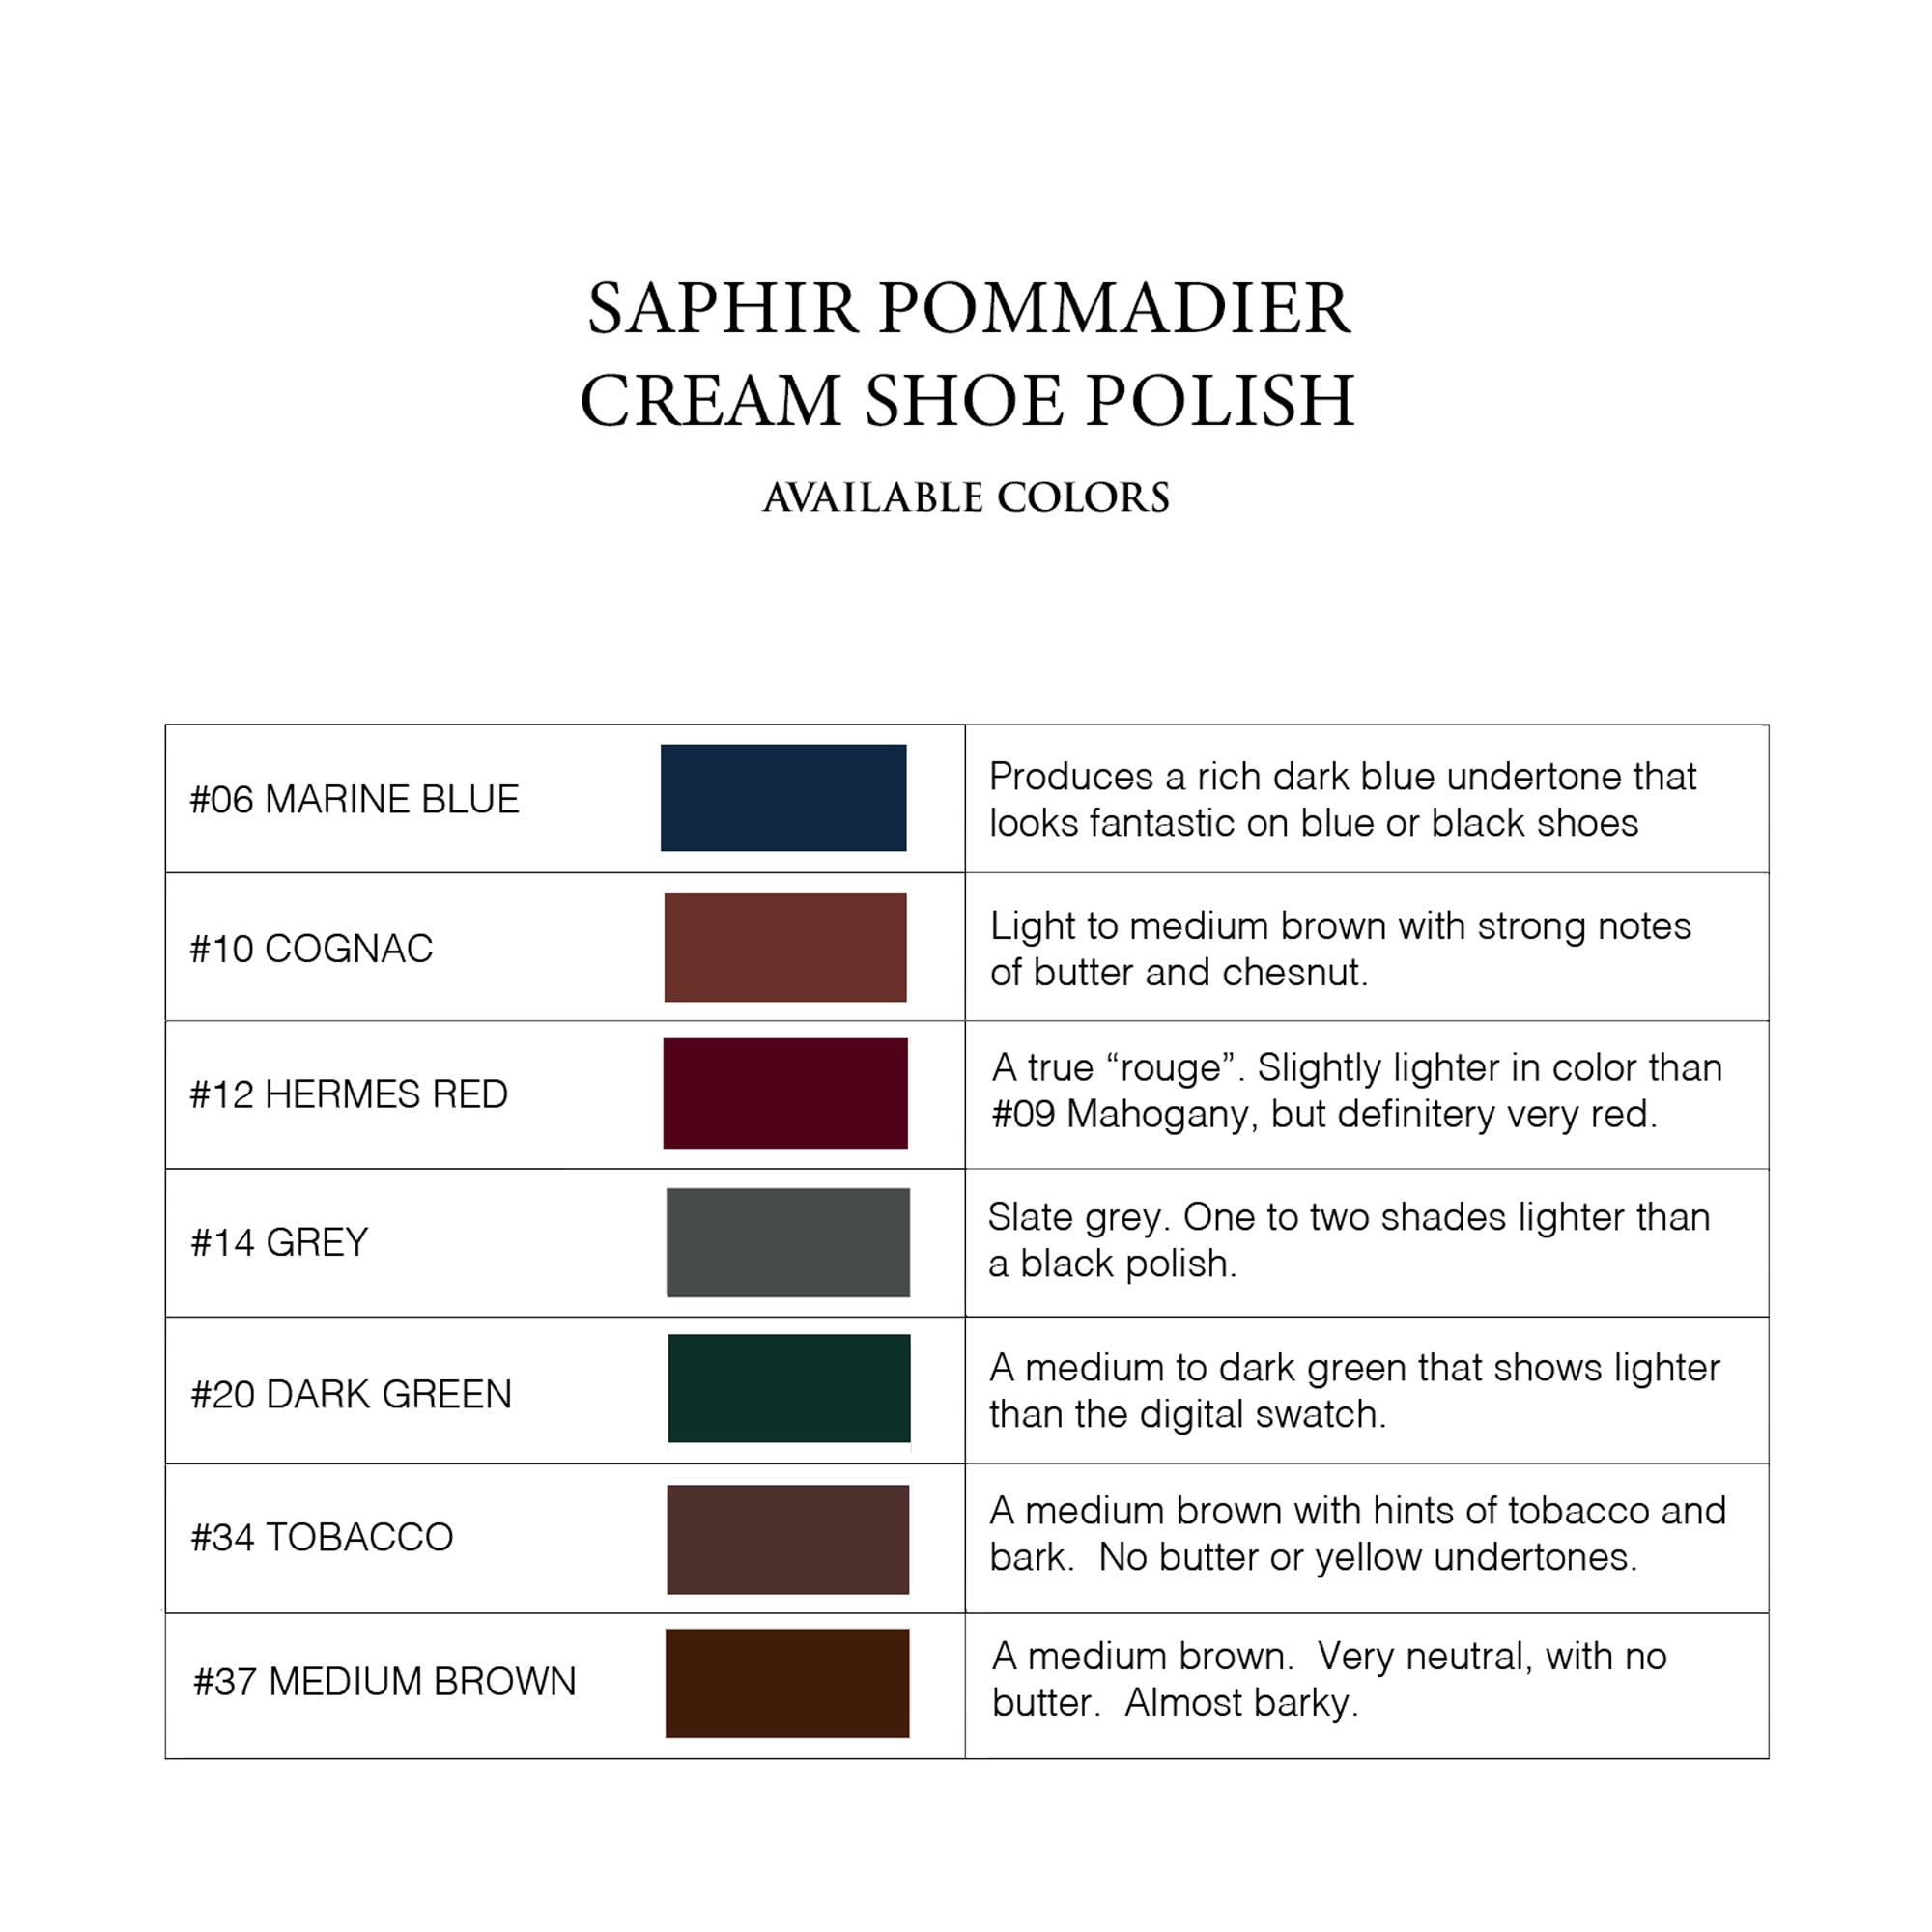 Saphir Pommadier Cream Polish Samples from KirbyAllison.com for color matching.